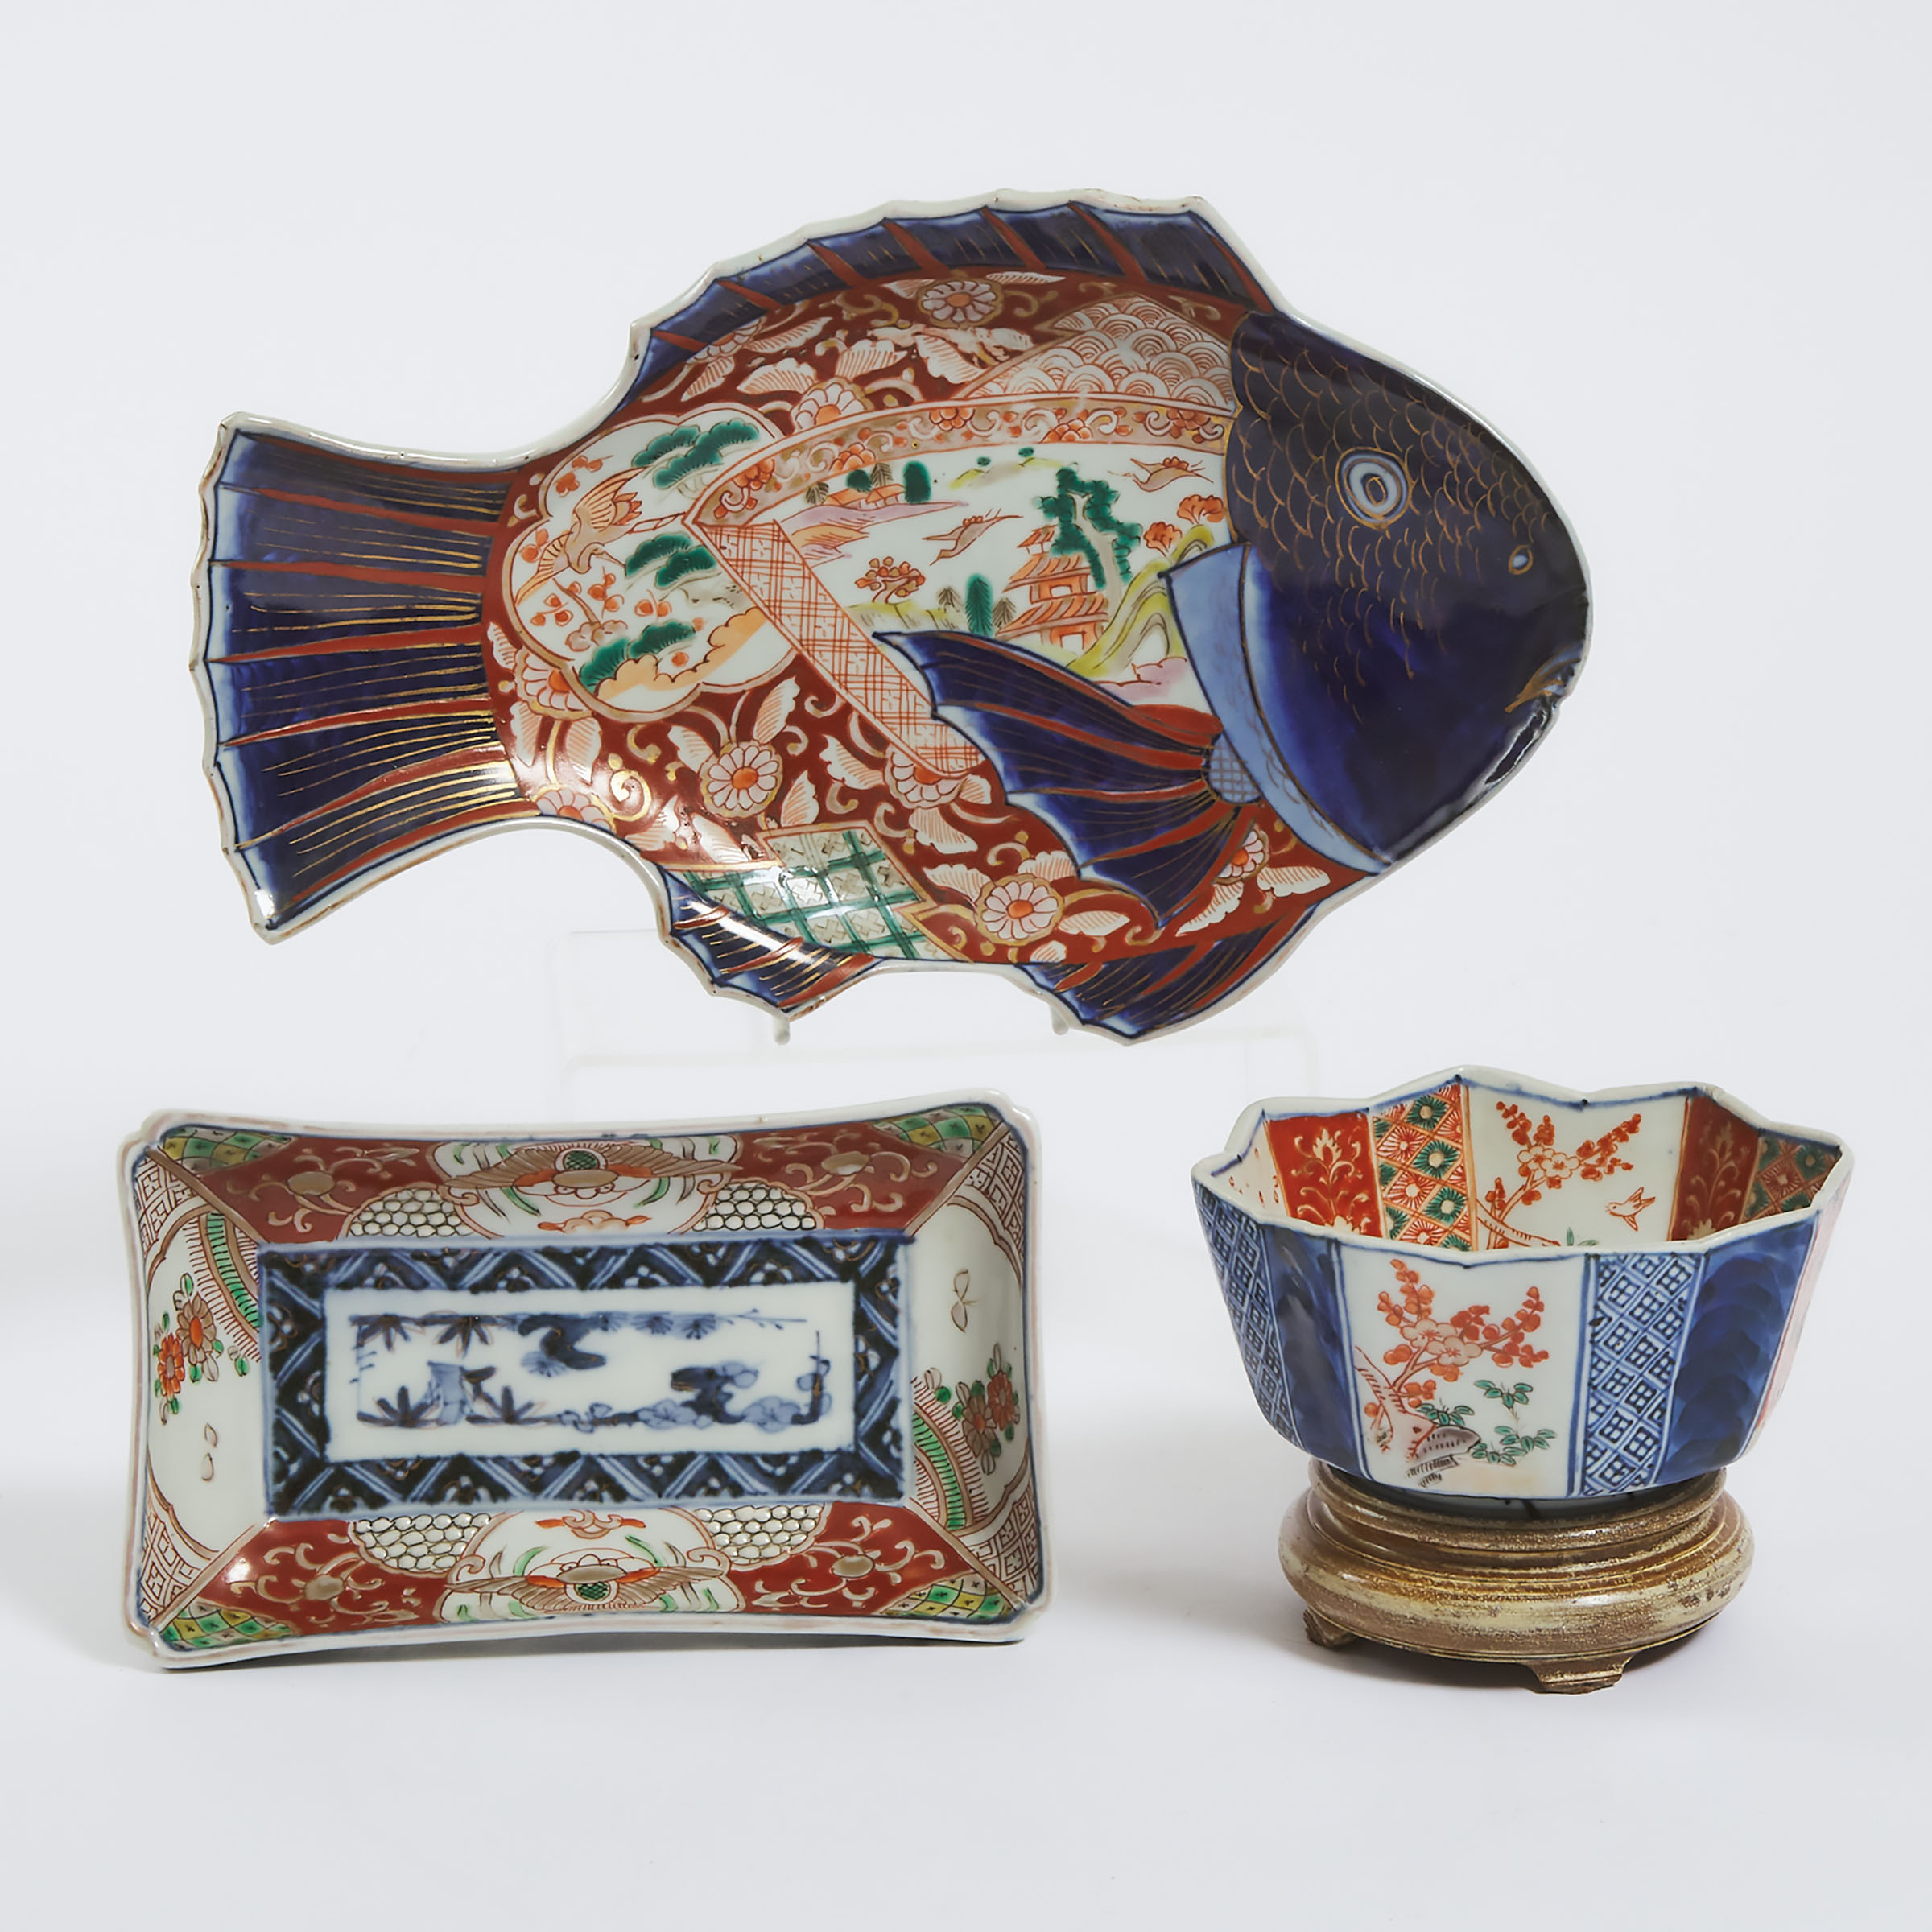 An Imari Fish-Shaped Platter, Together With an Imari Bowl and Rectangular Platter, Meiji Period, 19th Century